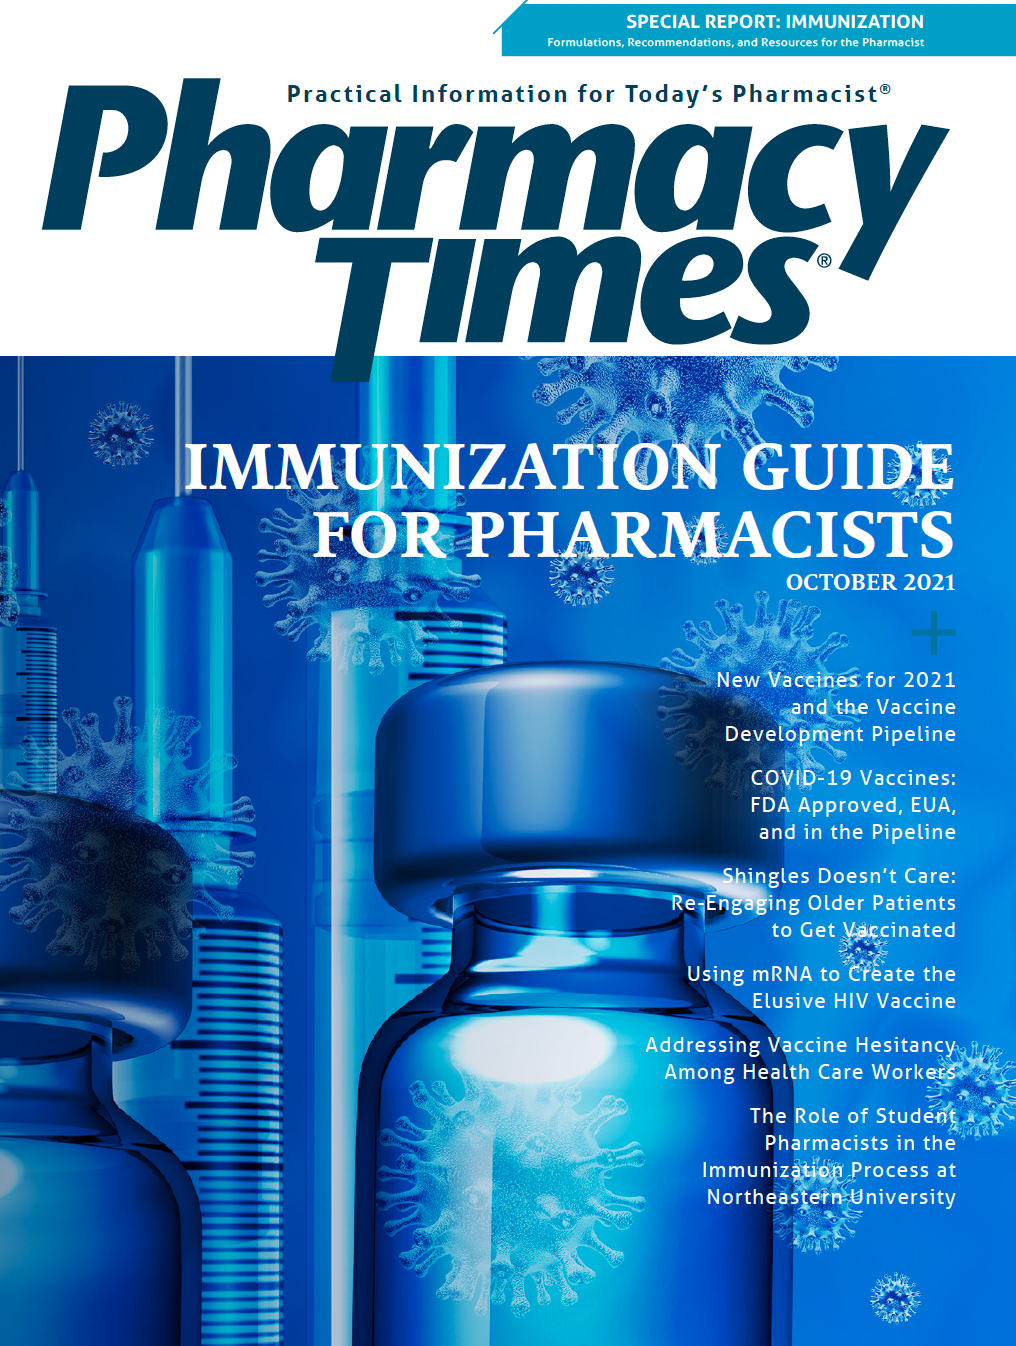 October 2021 Immunization Guide for Pharmacists